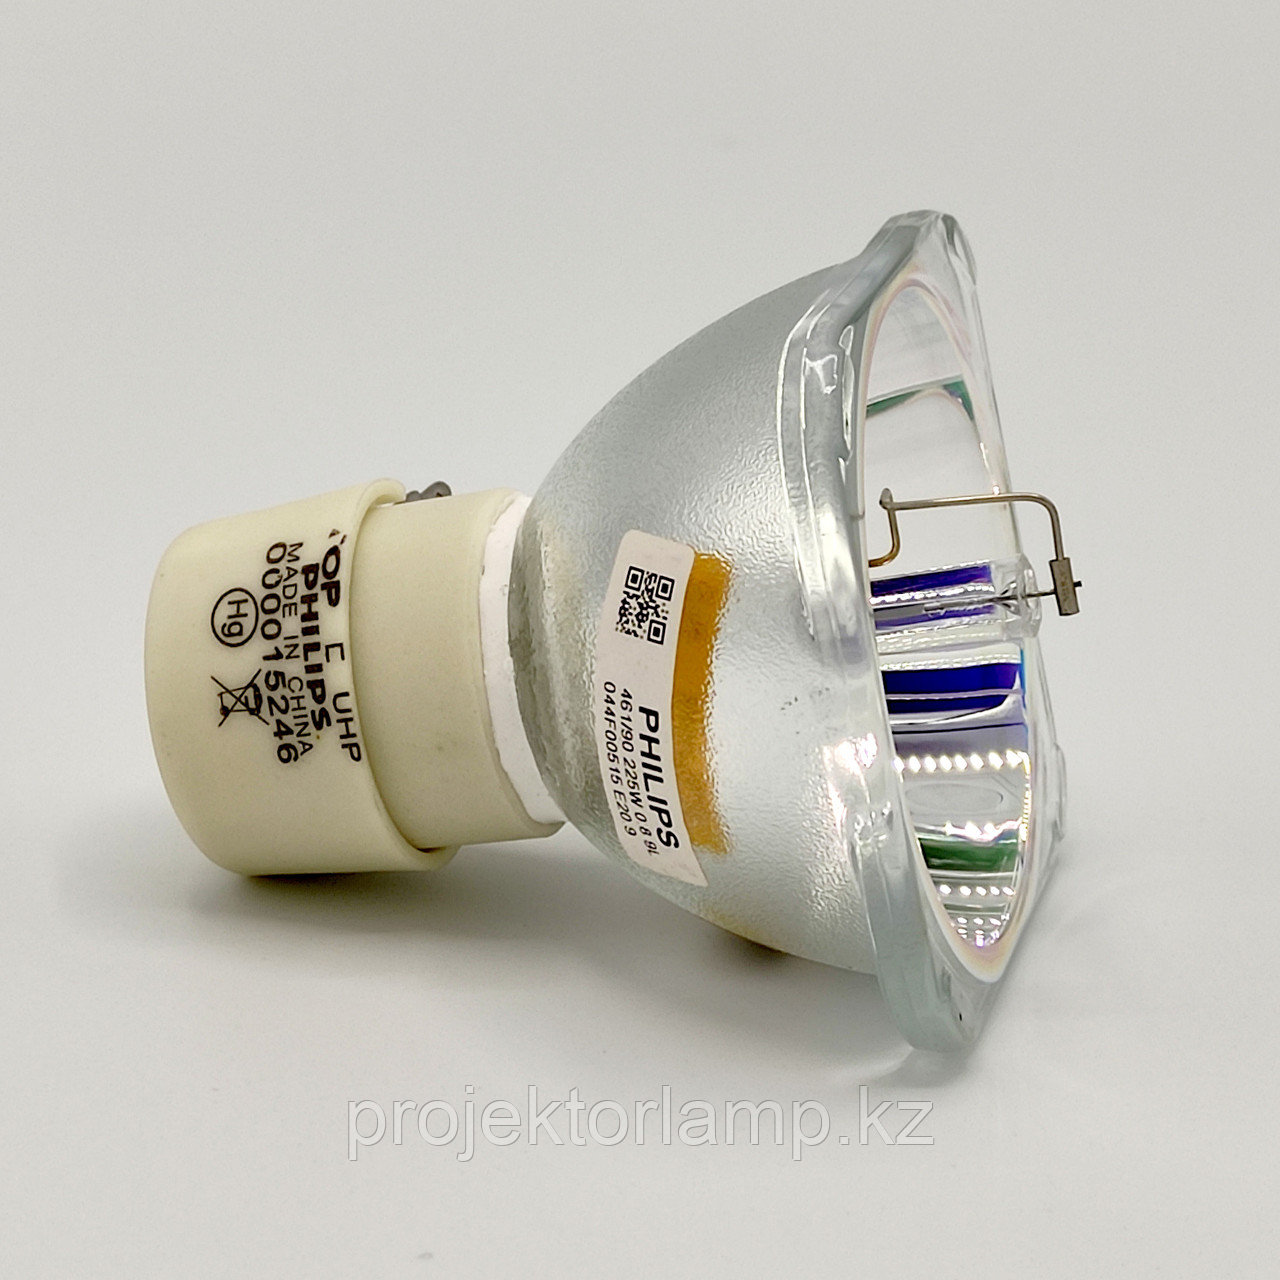 Лампа для проектора, Philips 220W. Оригинал!